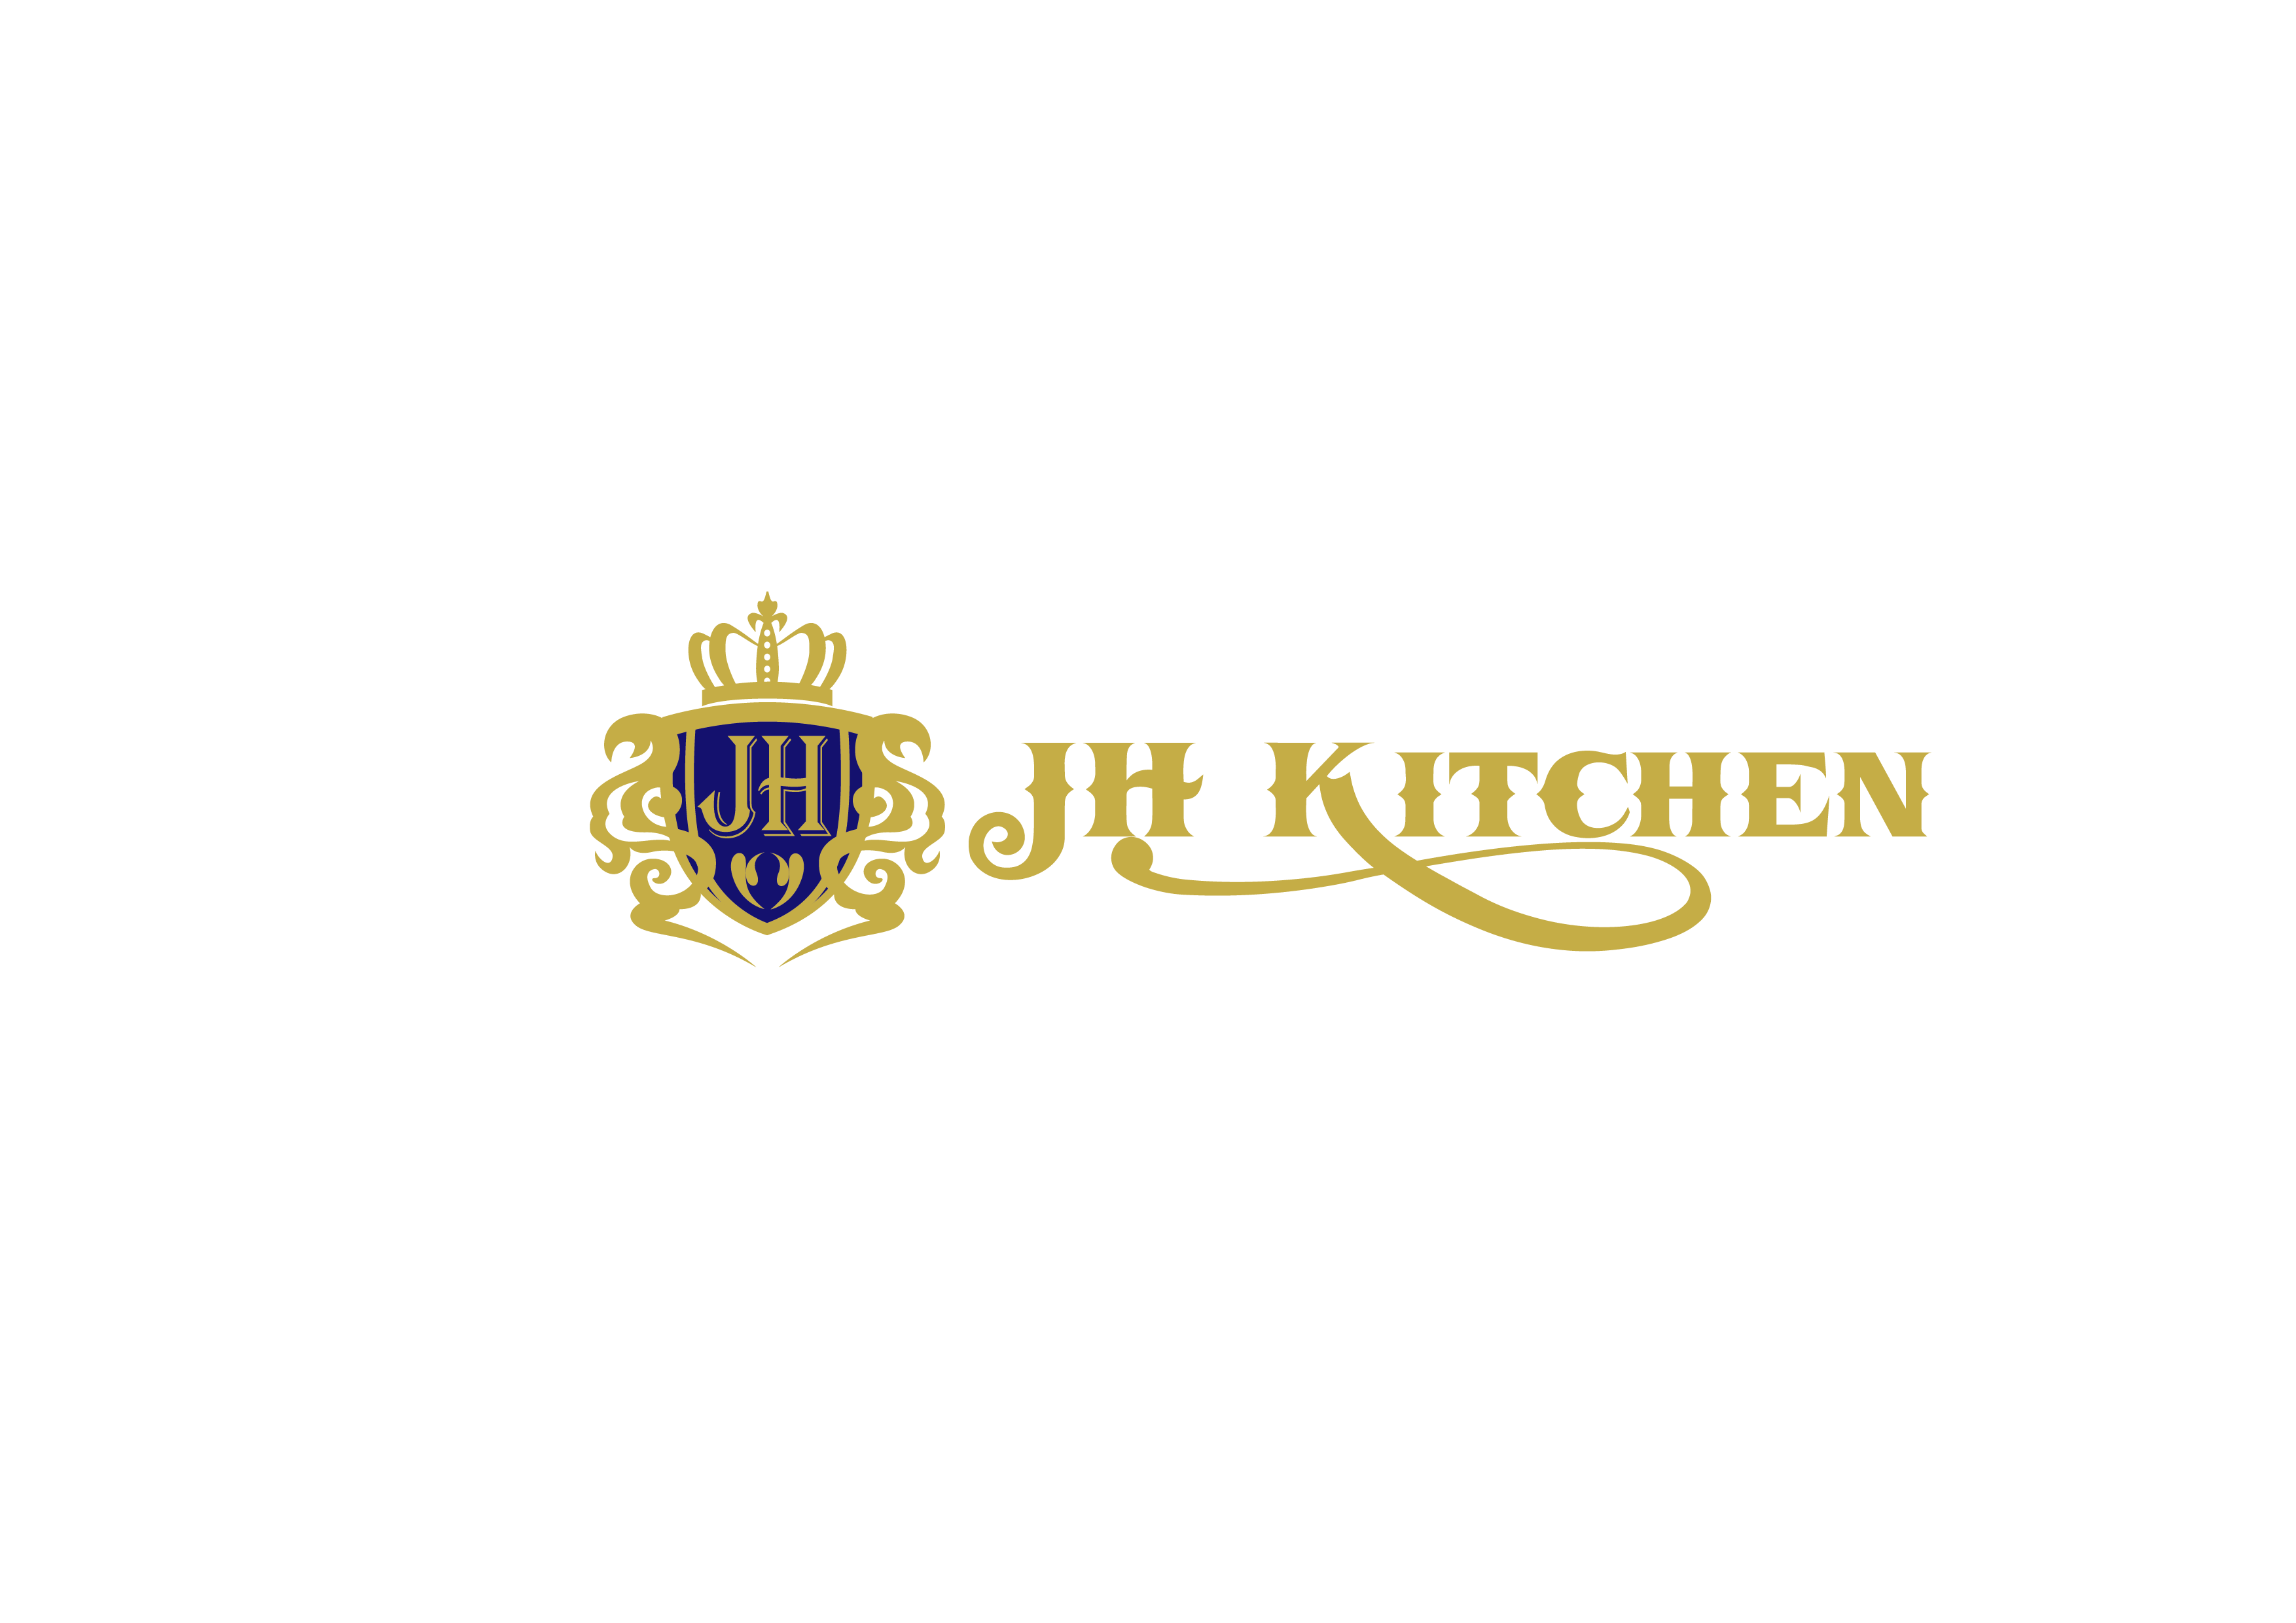 Jh Kitchen Cabinets Ltd.'s logo